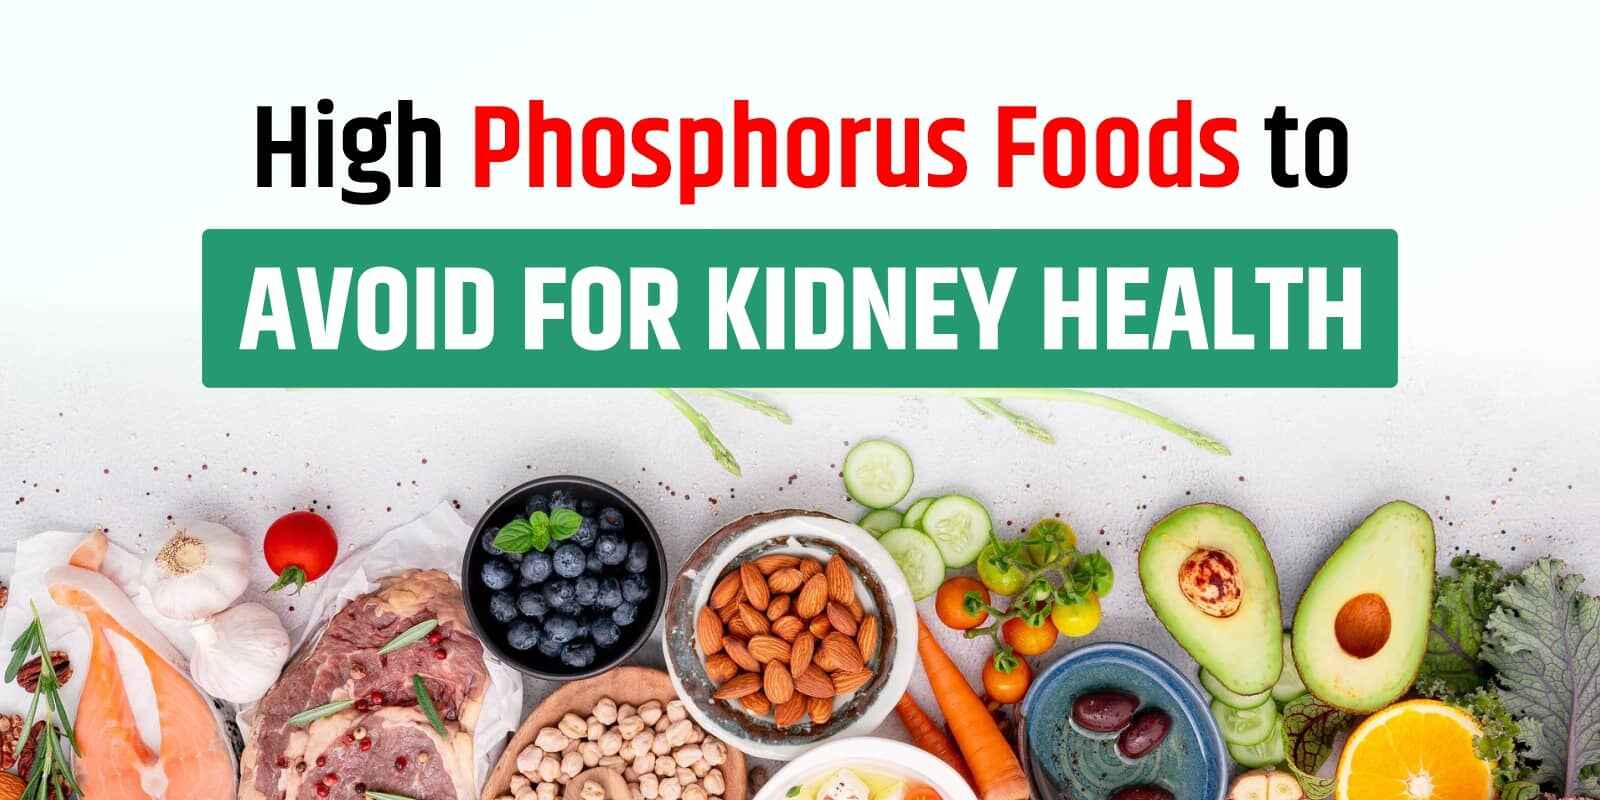 High Phosphorus Foods to Avoid for Kidney Health